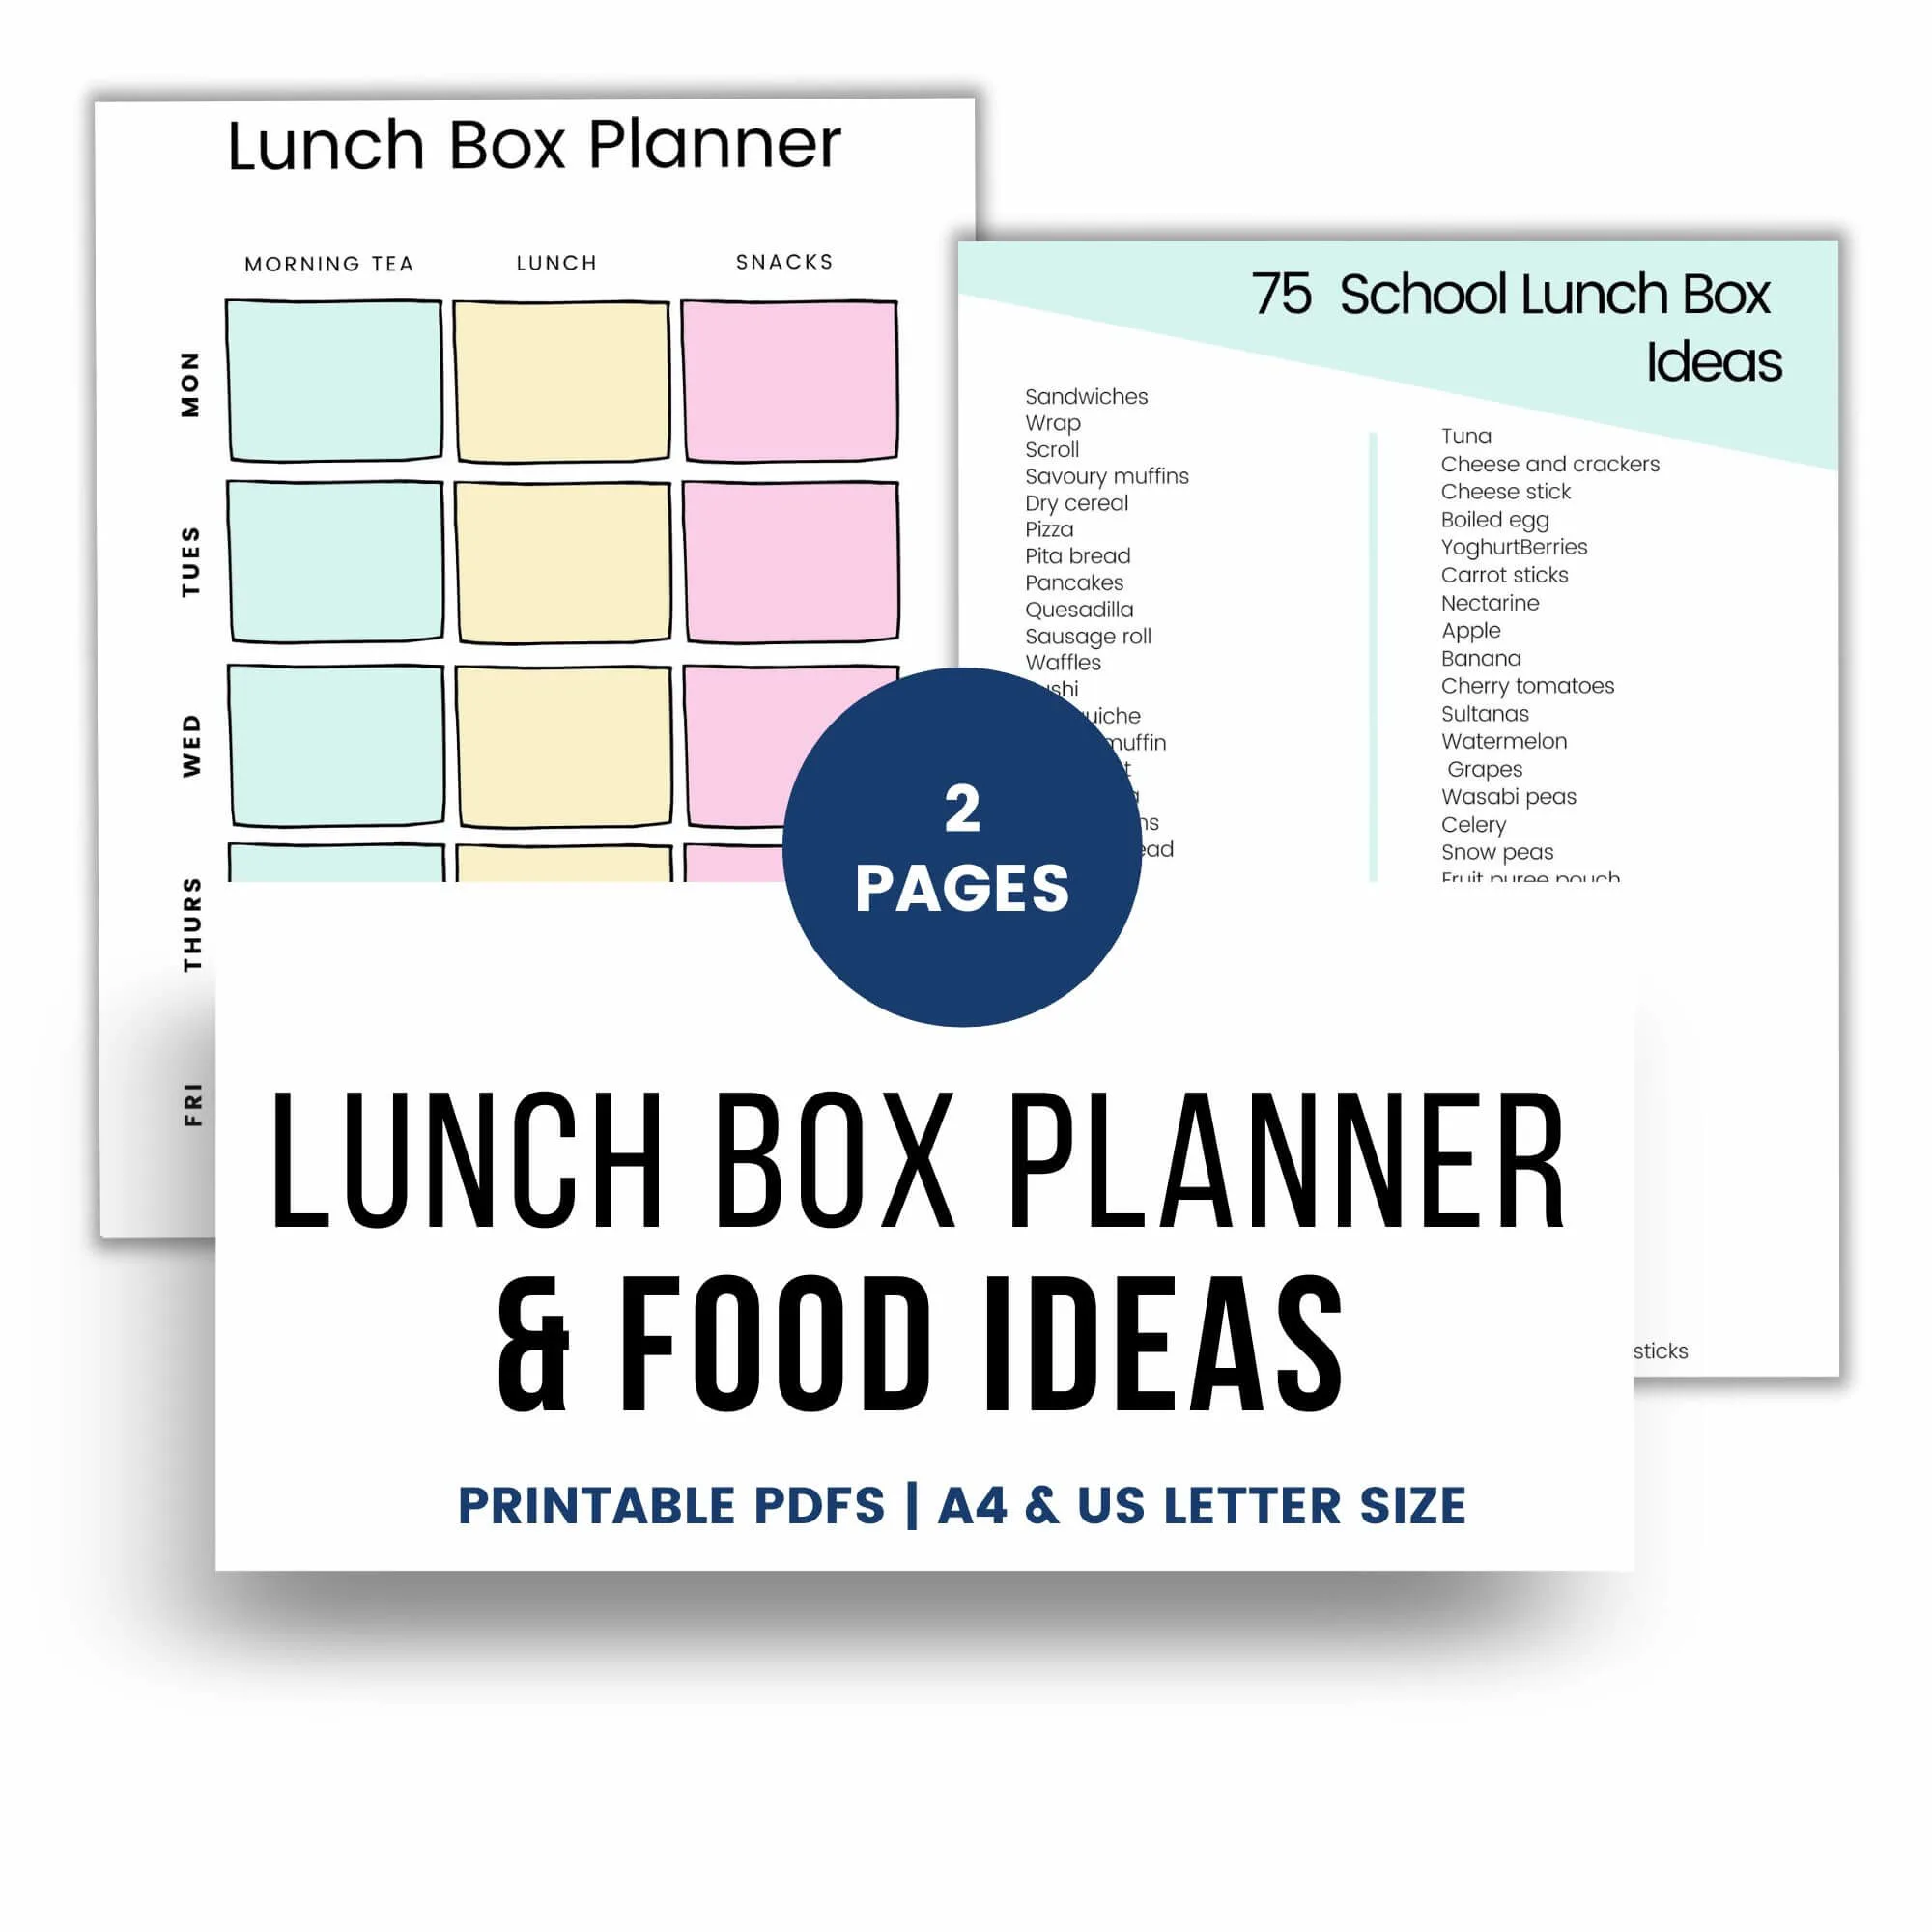 Lunch box planner